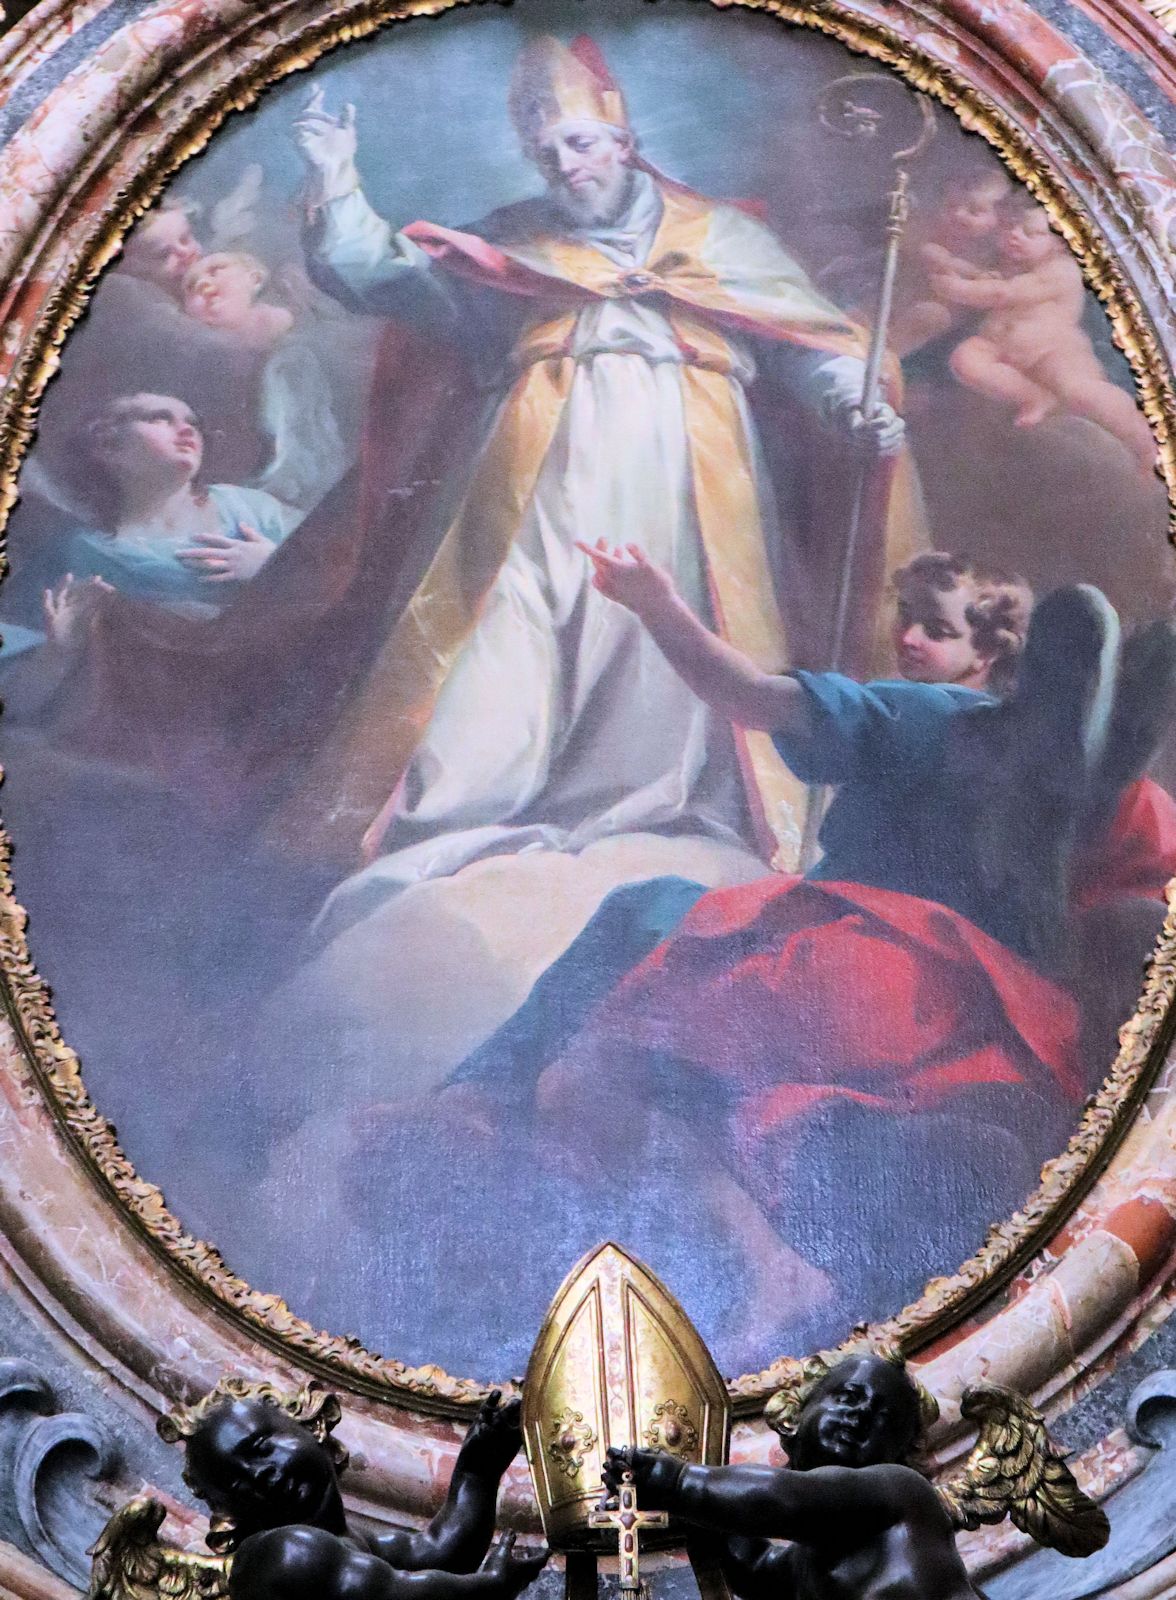 Federico Ferrari: Alexander segnet, 1745, in der Kathedrale in Pavia